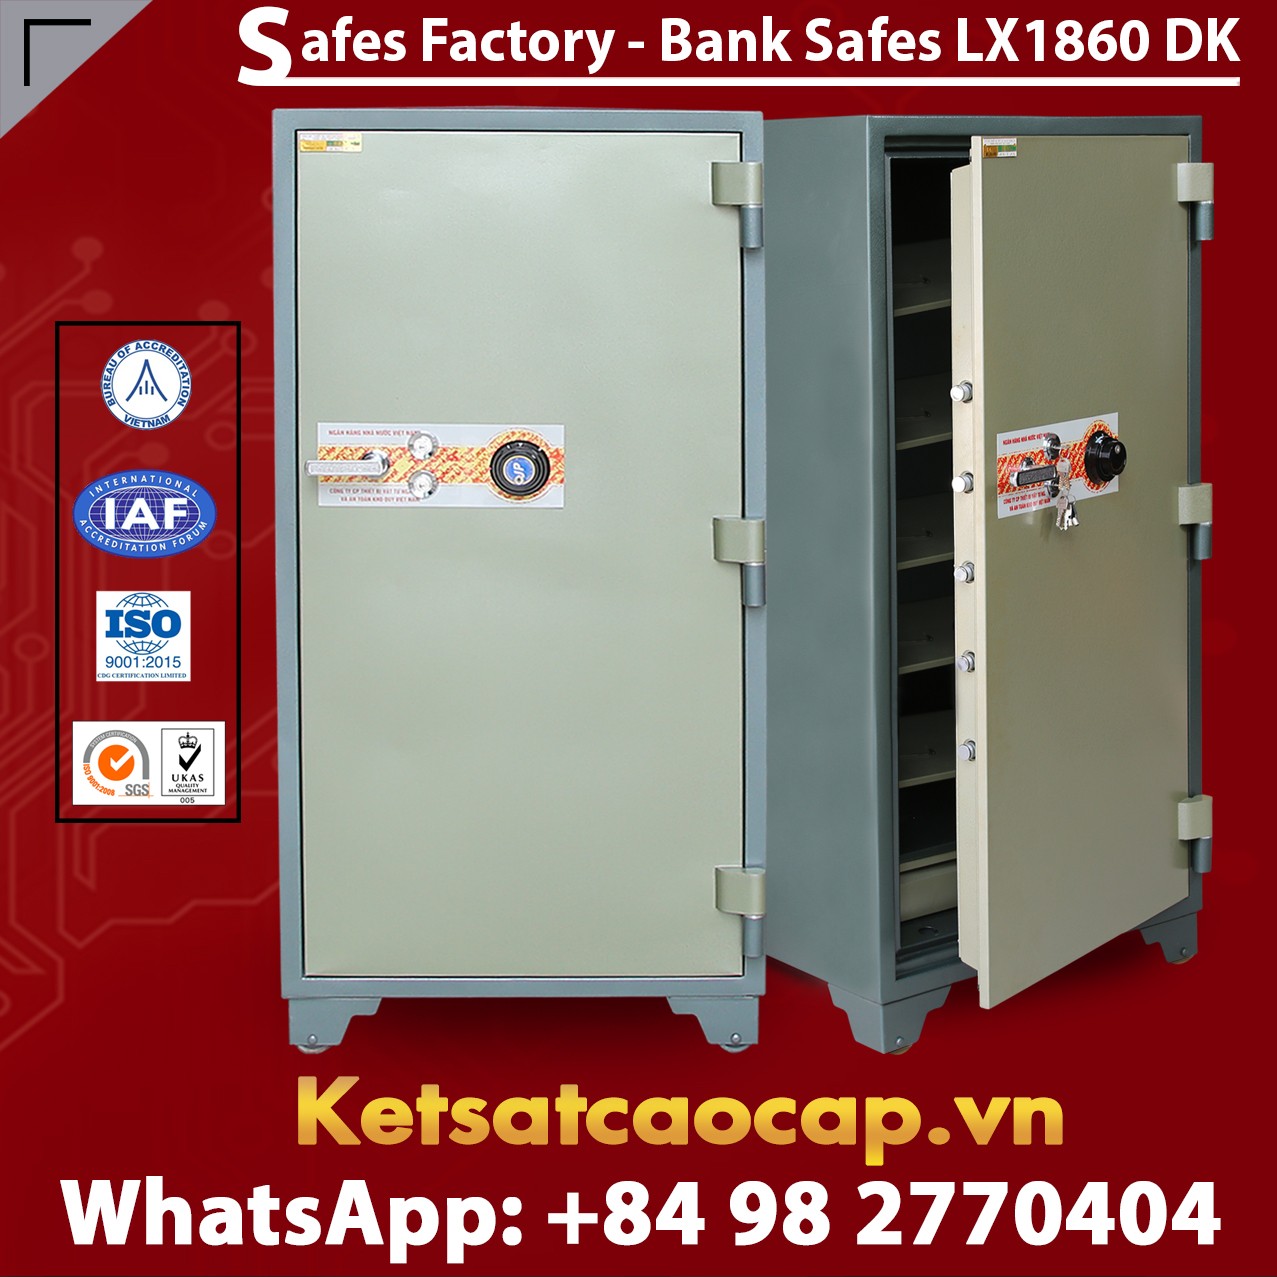 Bank Safes LX1860 DK Top High Security Bank Safes Box - Factory Price